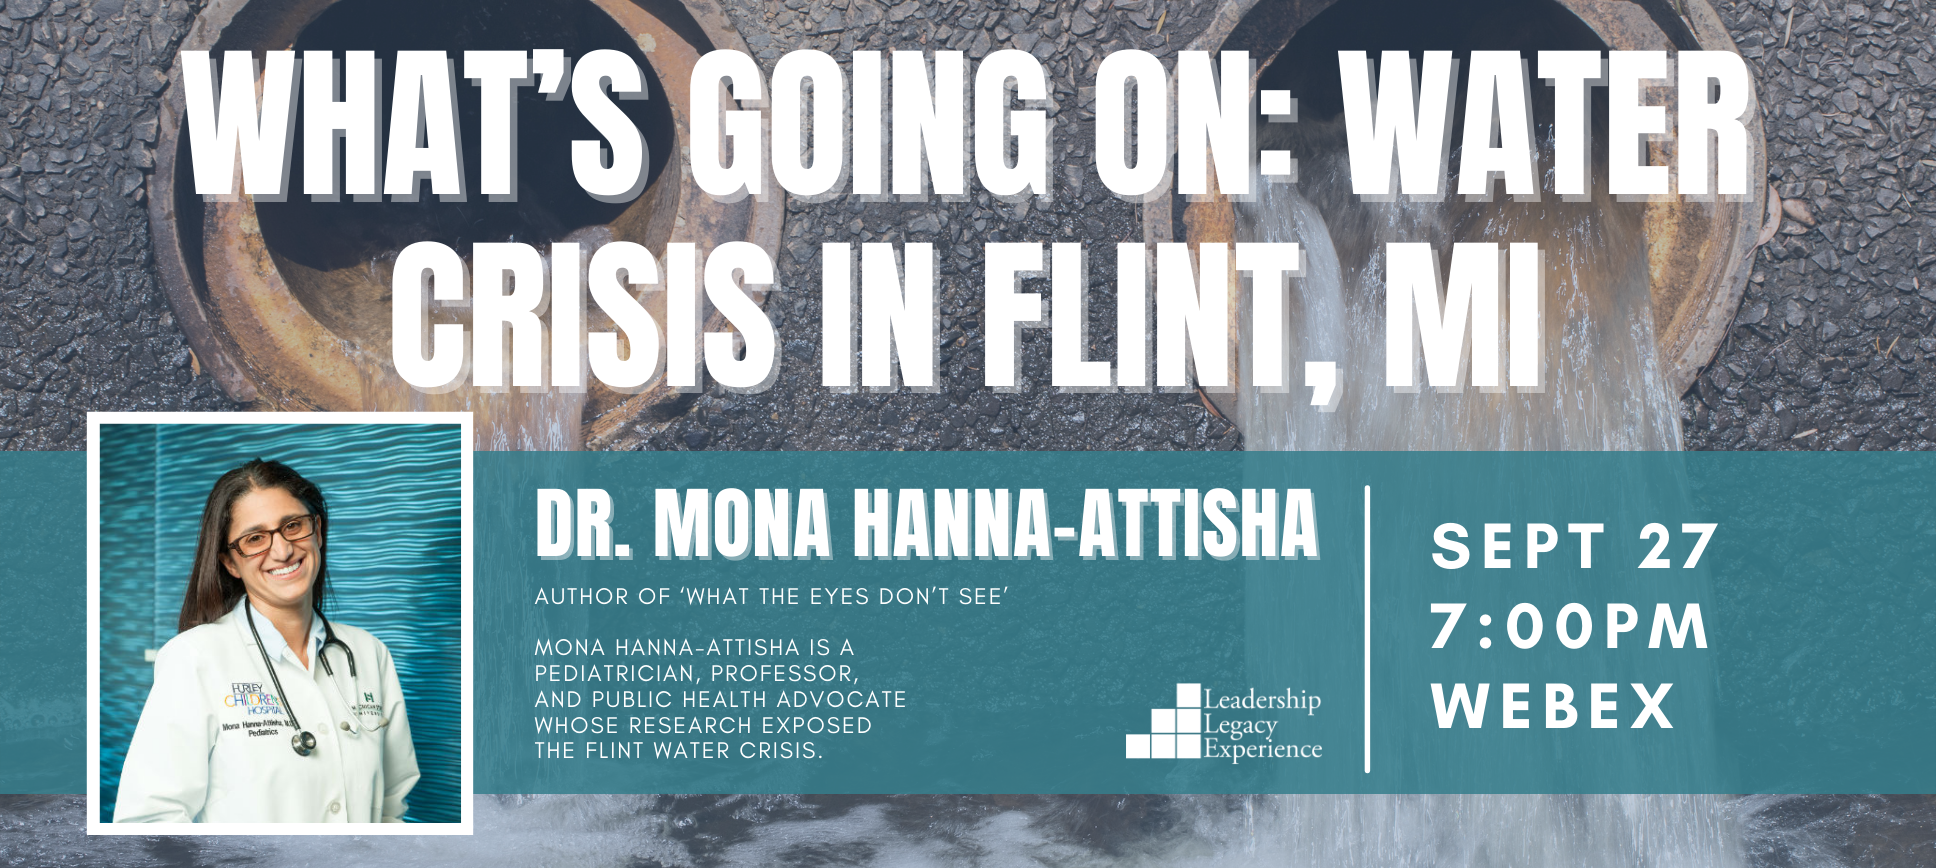 Flint MI Water crisis Event